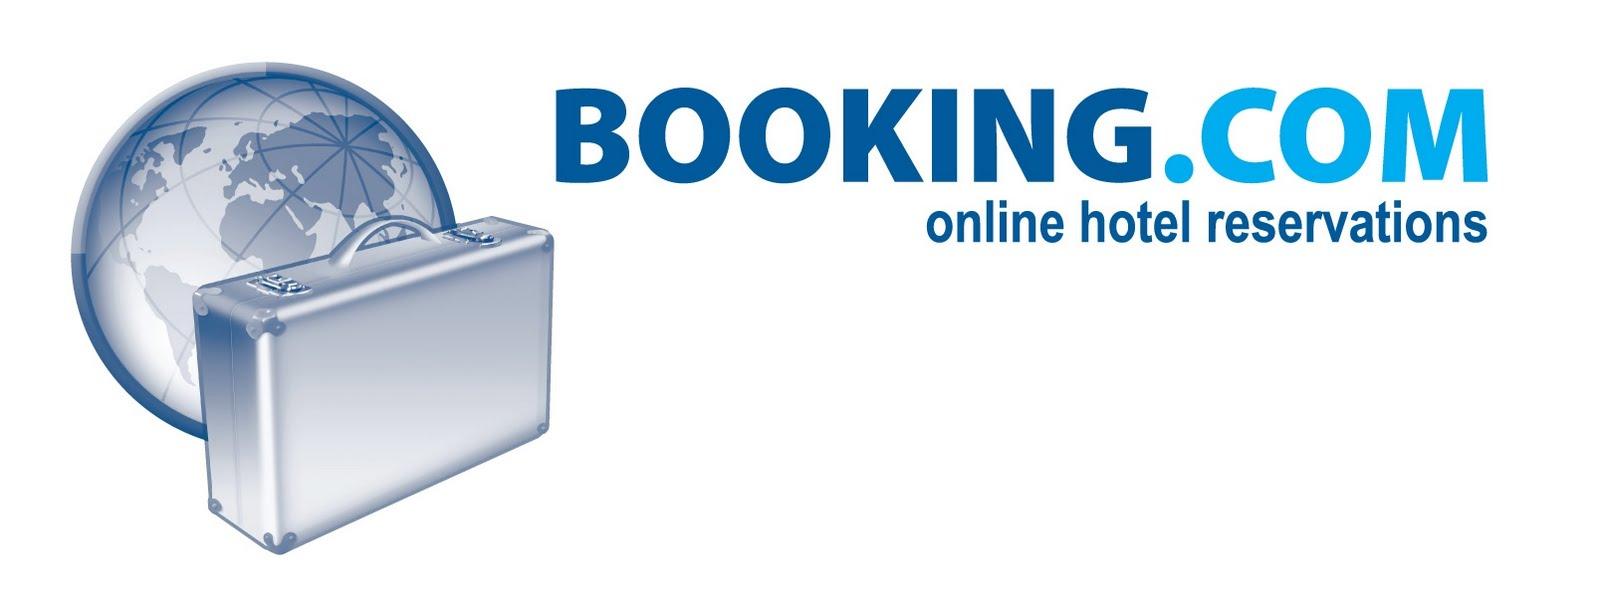 New booking ru. Логотип букинга. Букинг. Booking.com логотип. Букинг ком логотип.